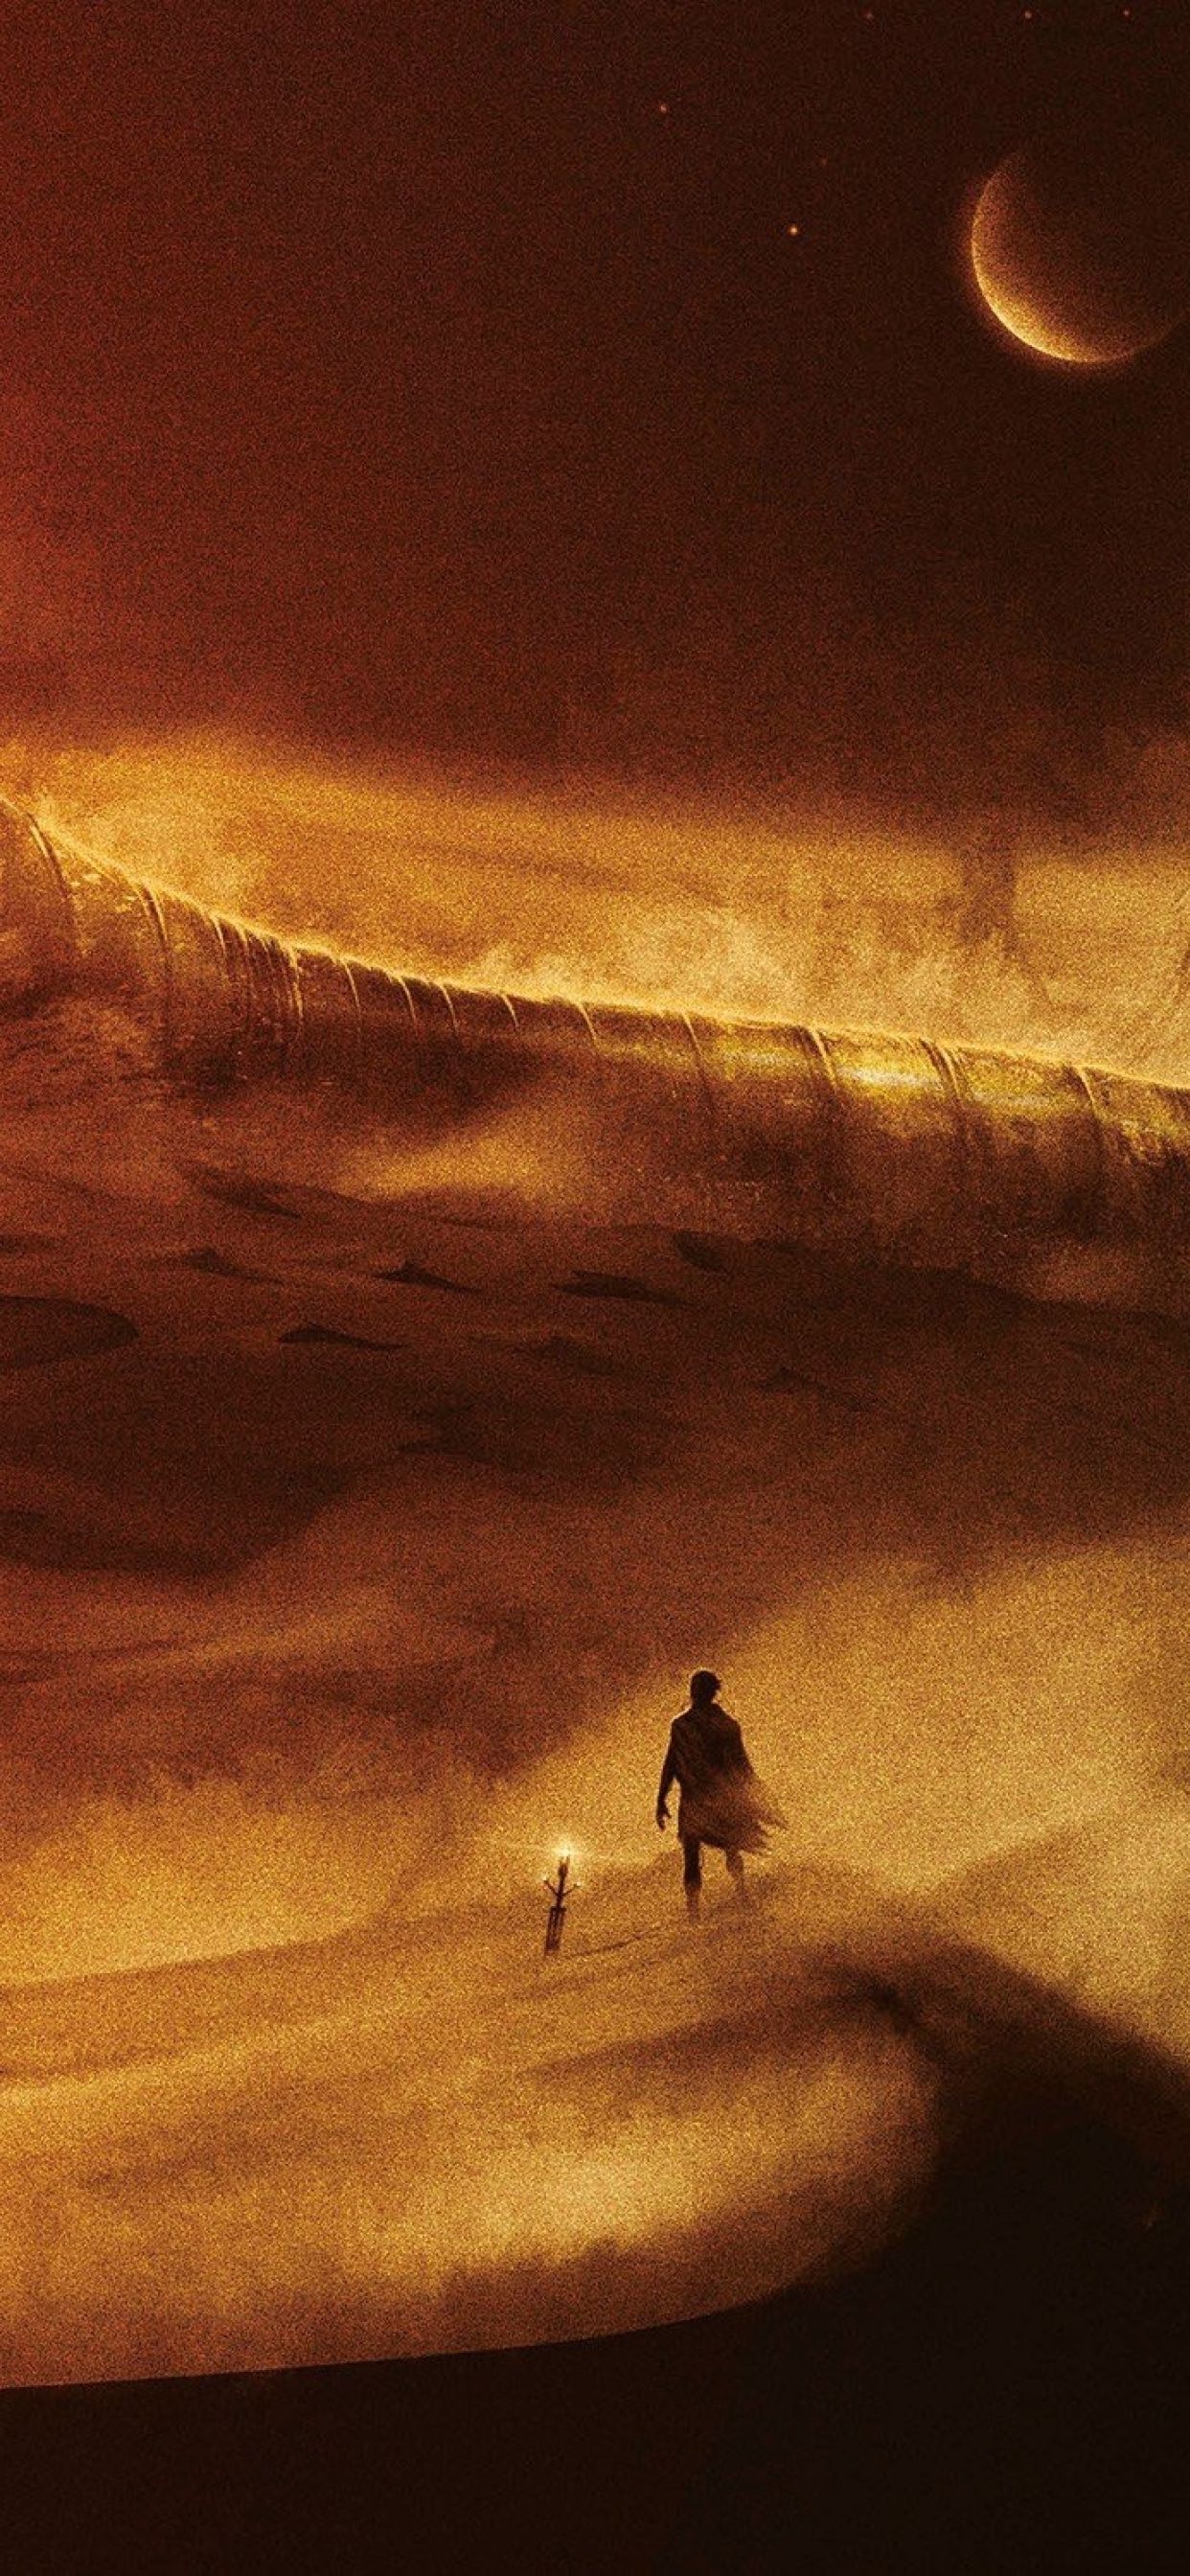 Dune Movie Concept Art 2020 iPhone XS MAX Wallpaper, HD